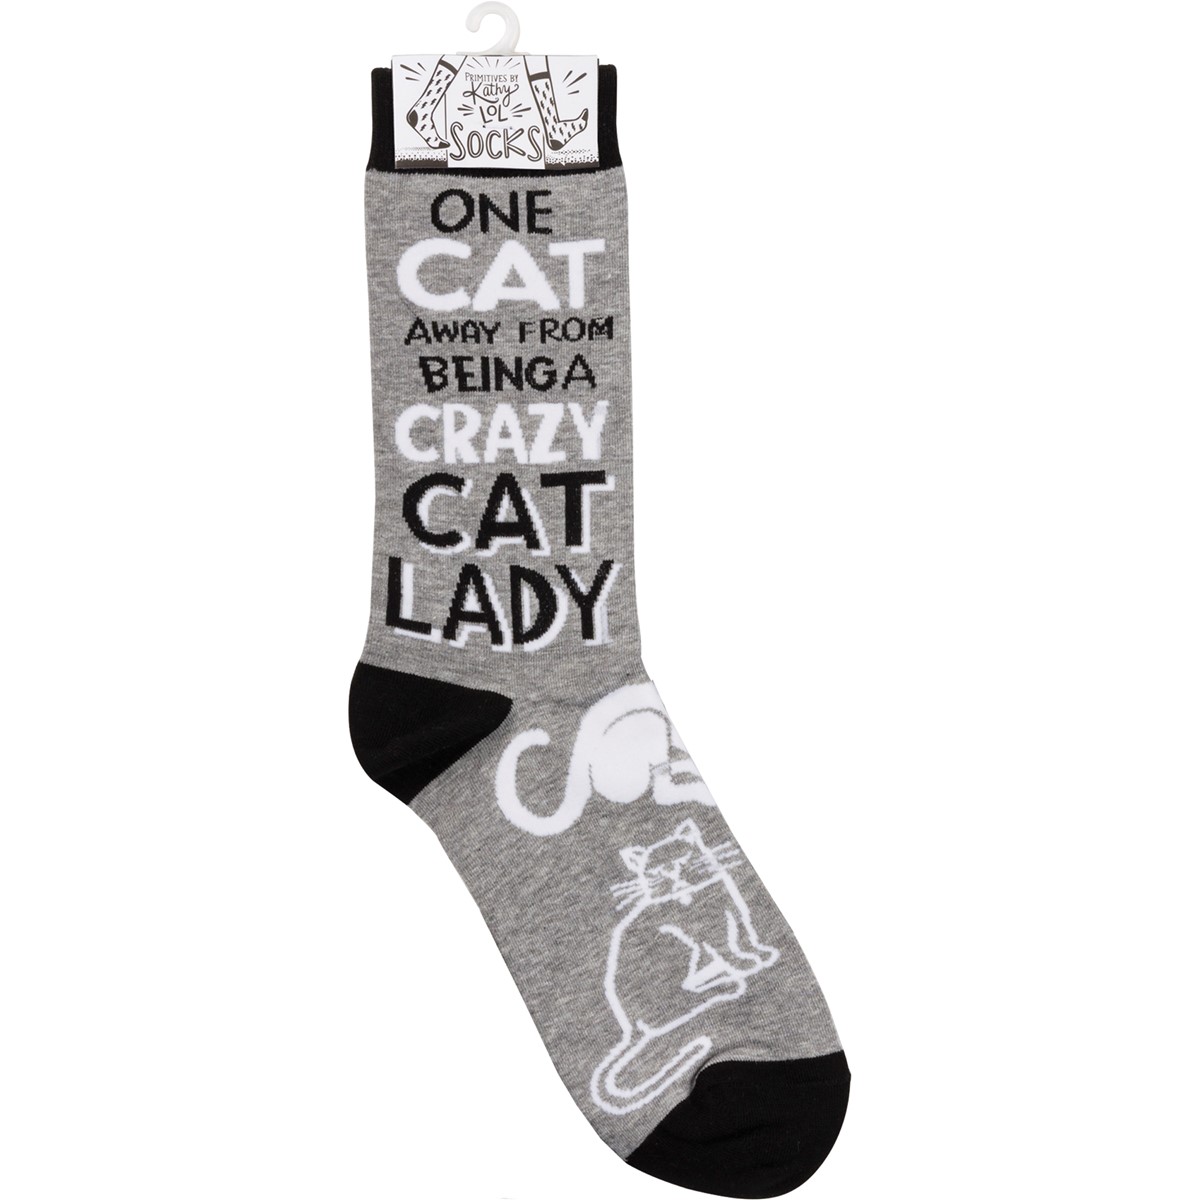 Crazy Cat Lady Socks - Cotton, Nylon, Spandex